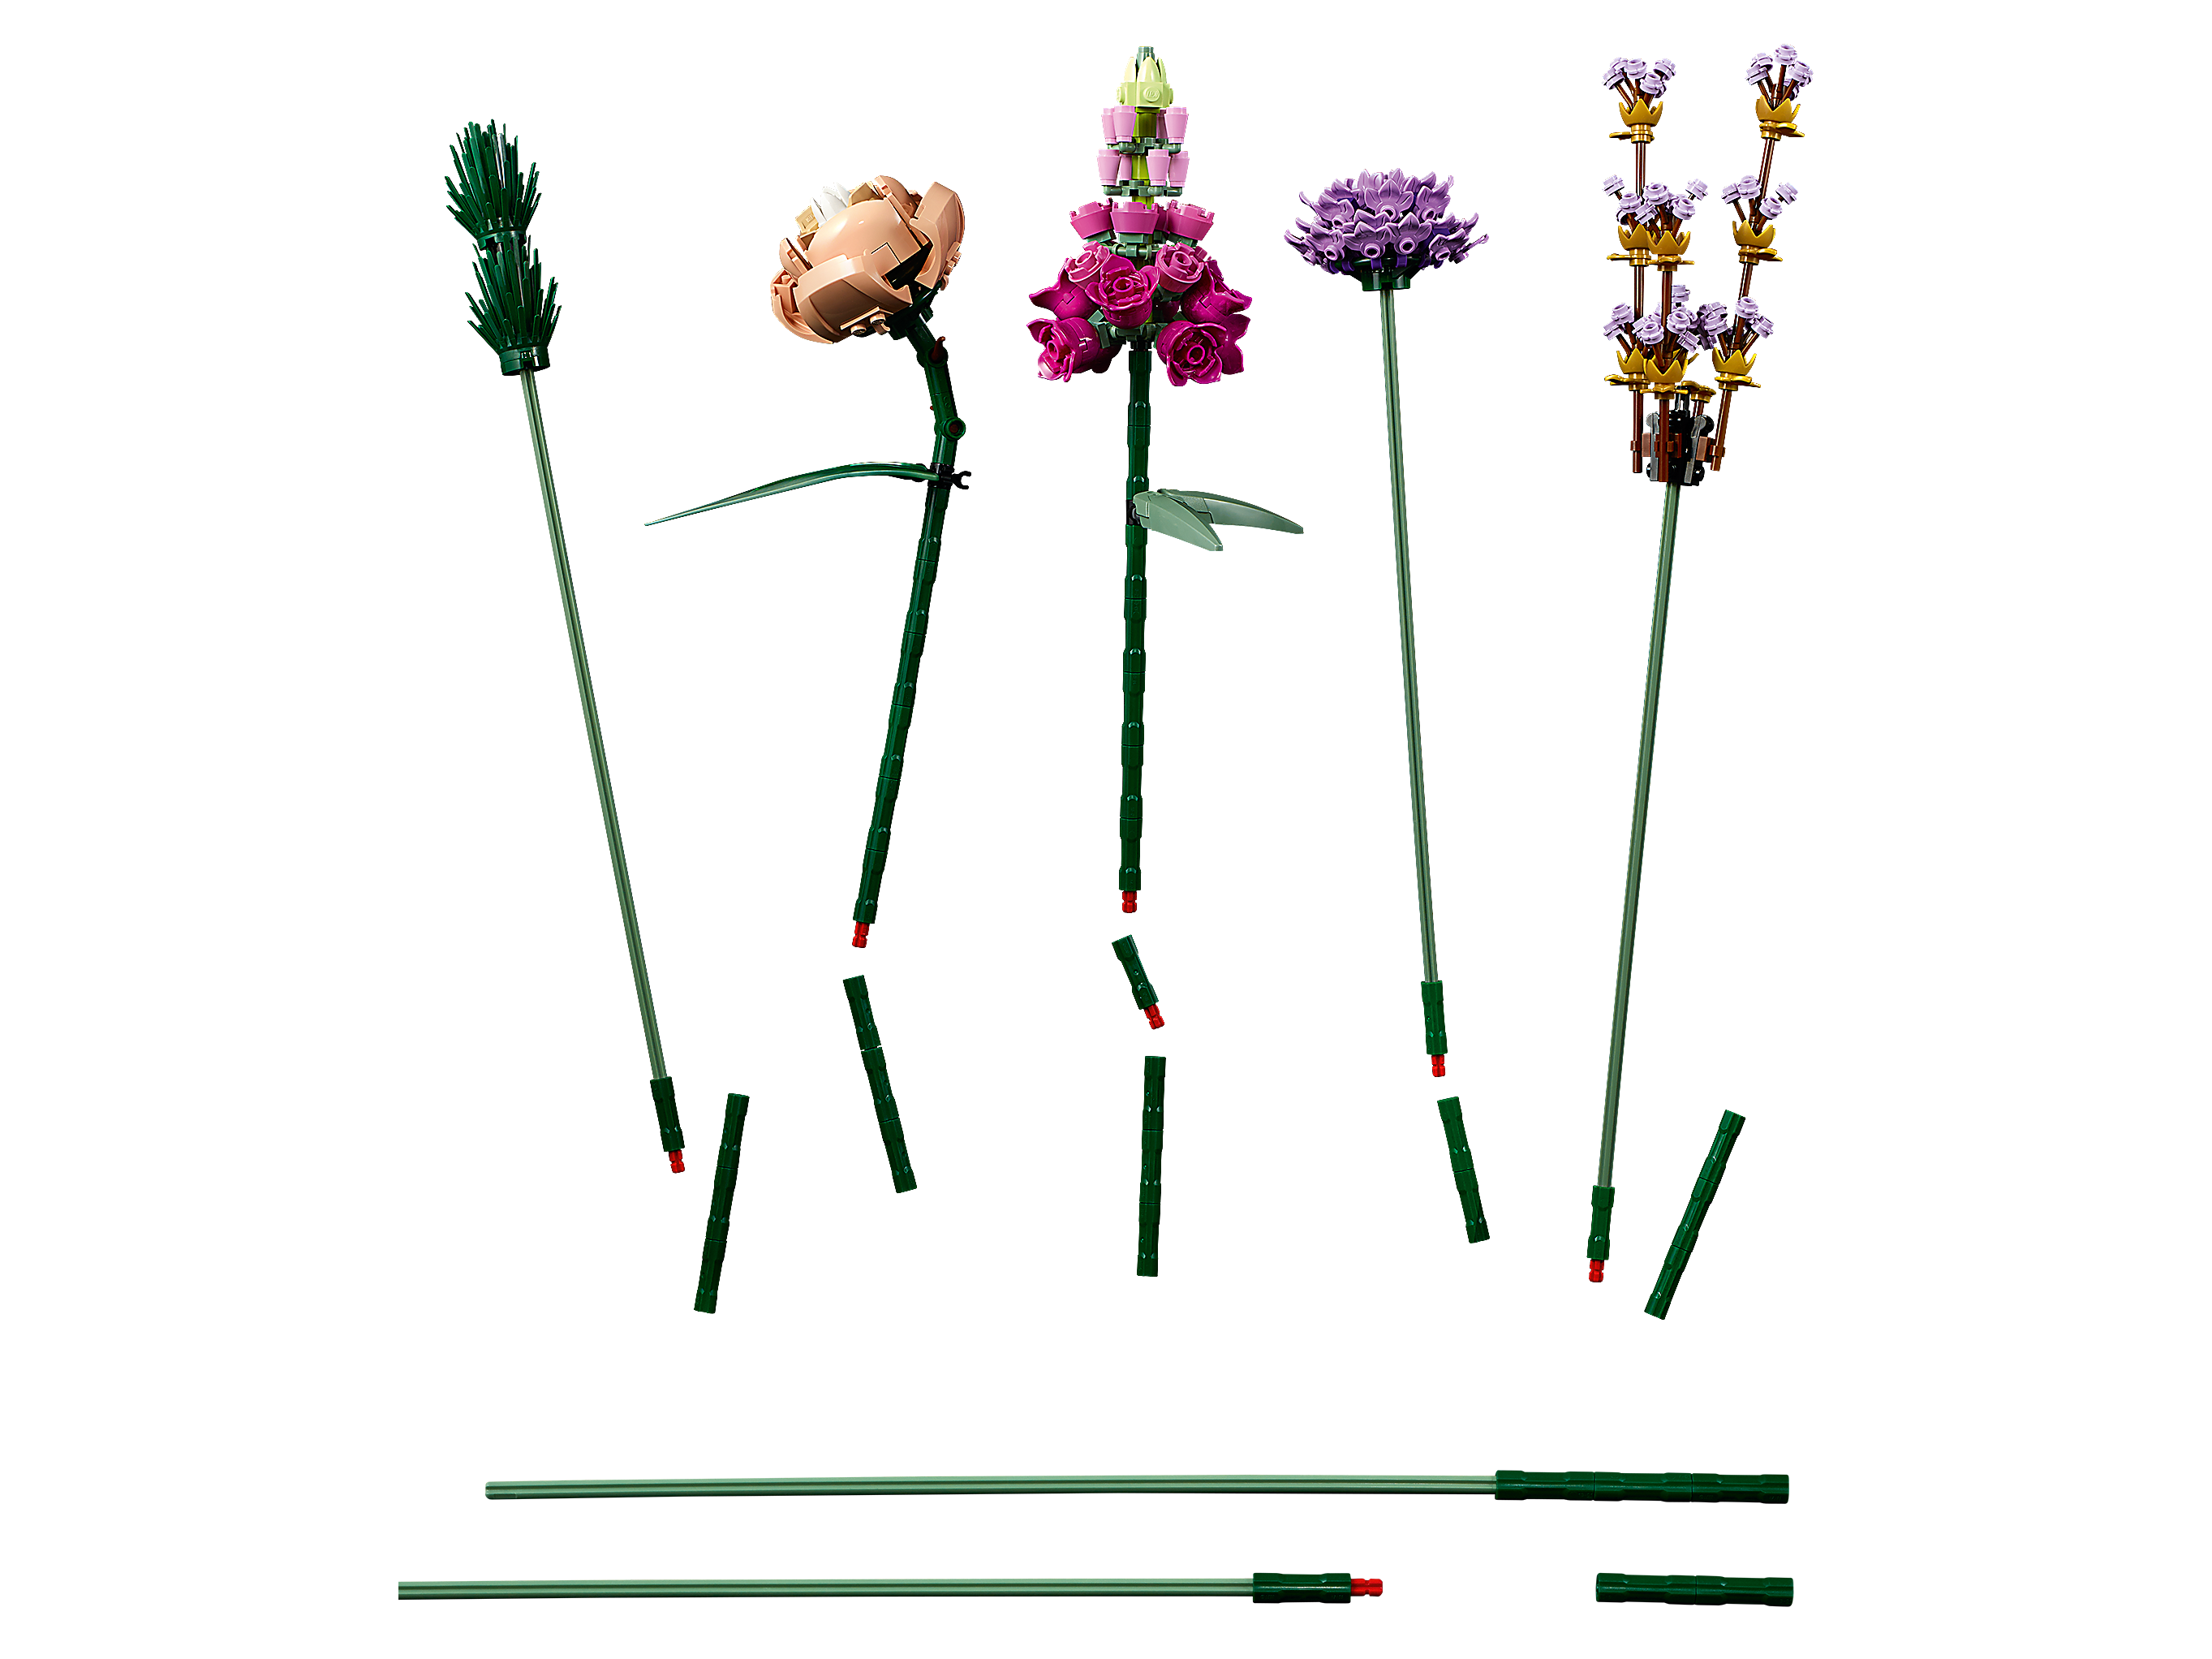 LEGO Botanical Collection Flower Bouquet Set 10280 - US